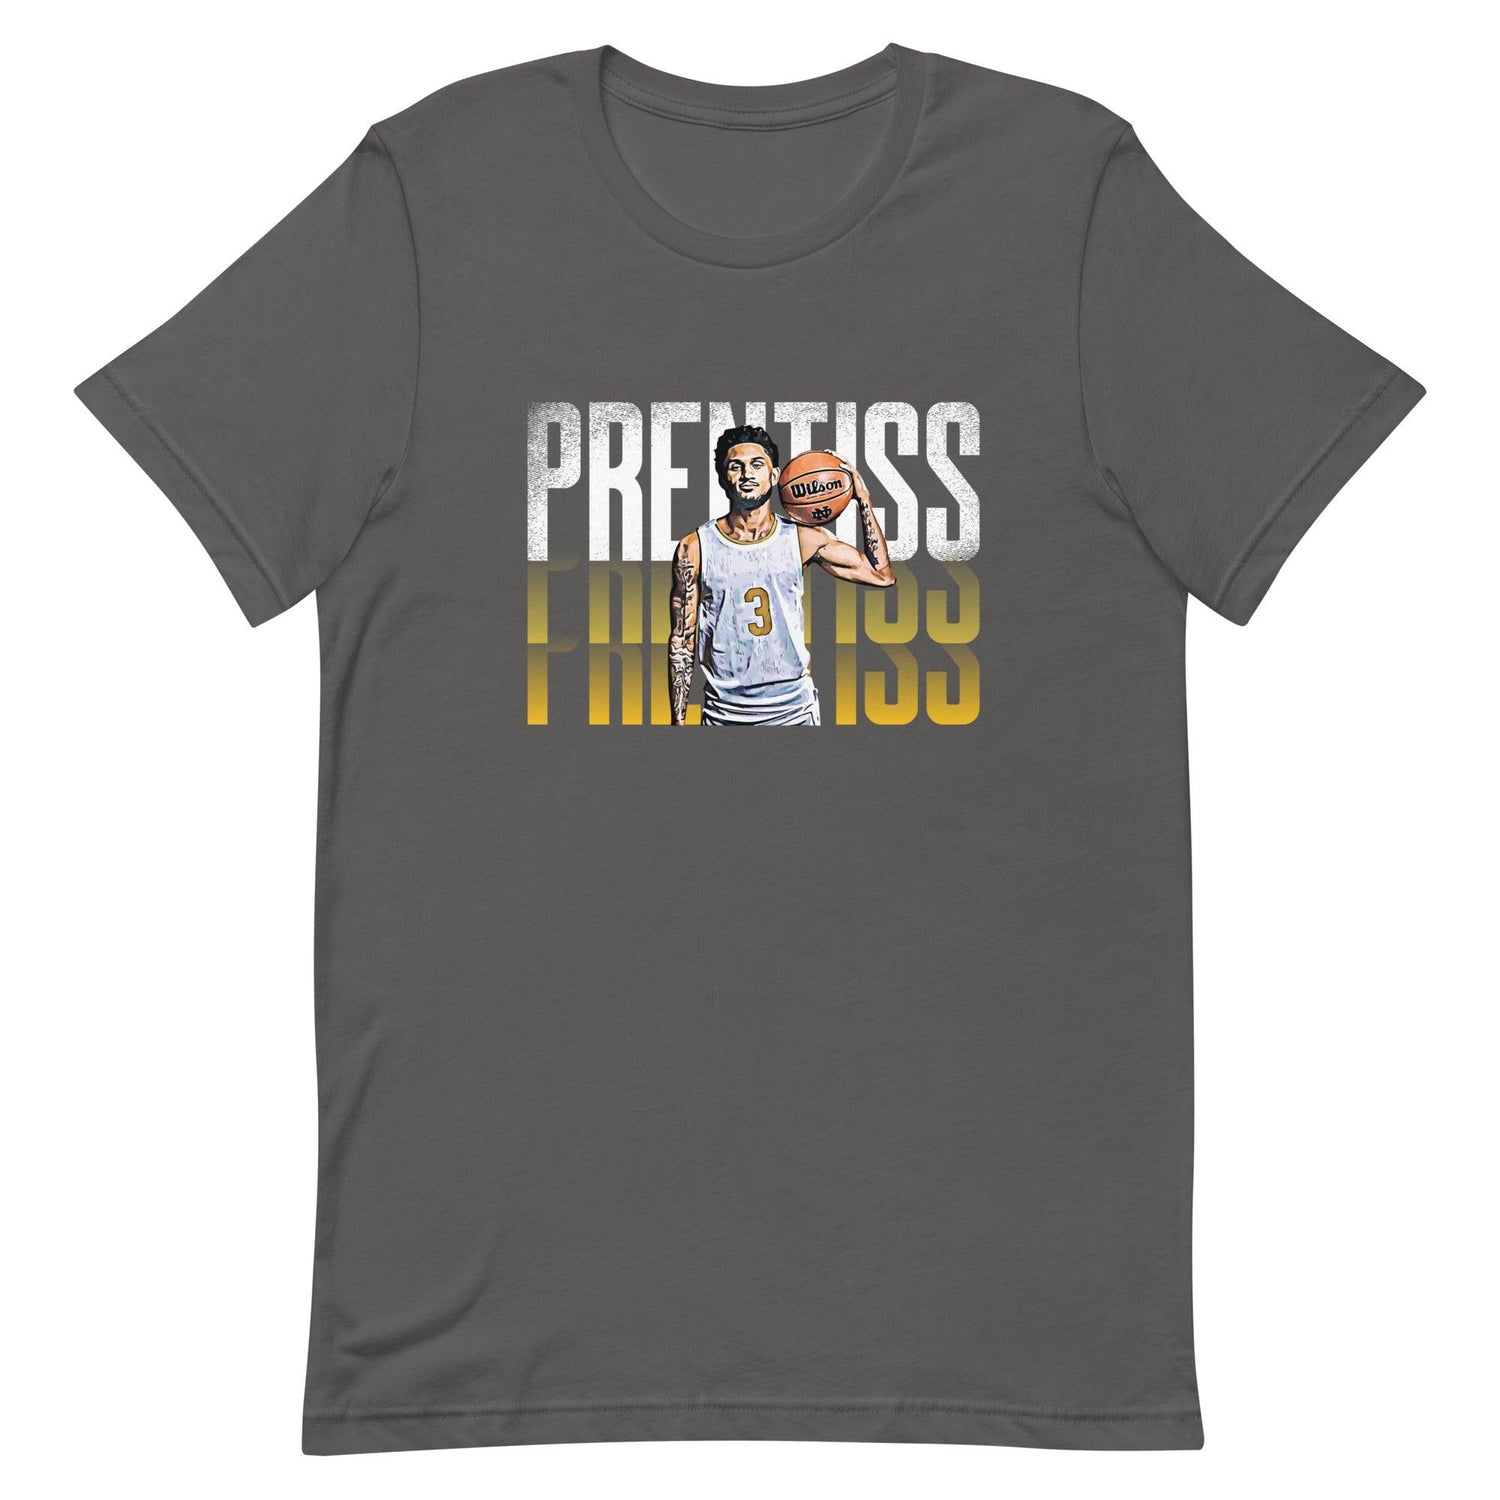 Prentiss Hubb “Essential” t-shirt - Fan Arch